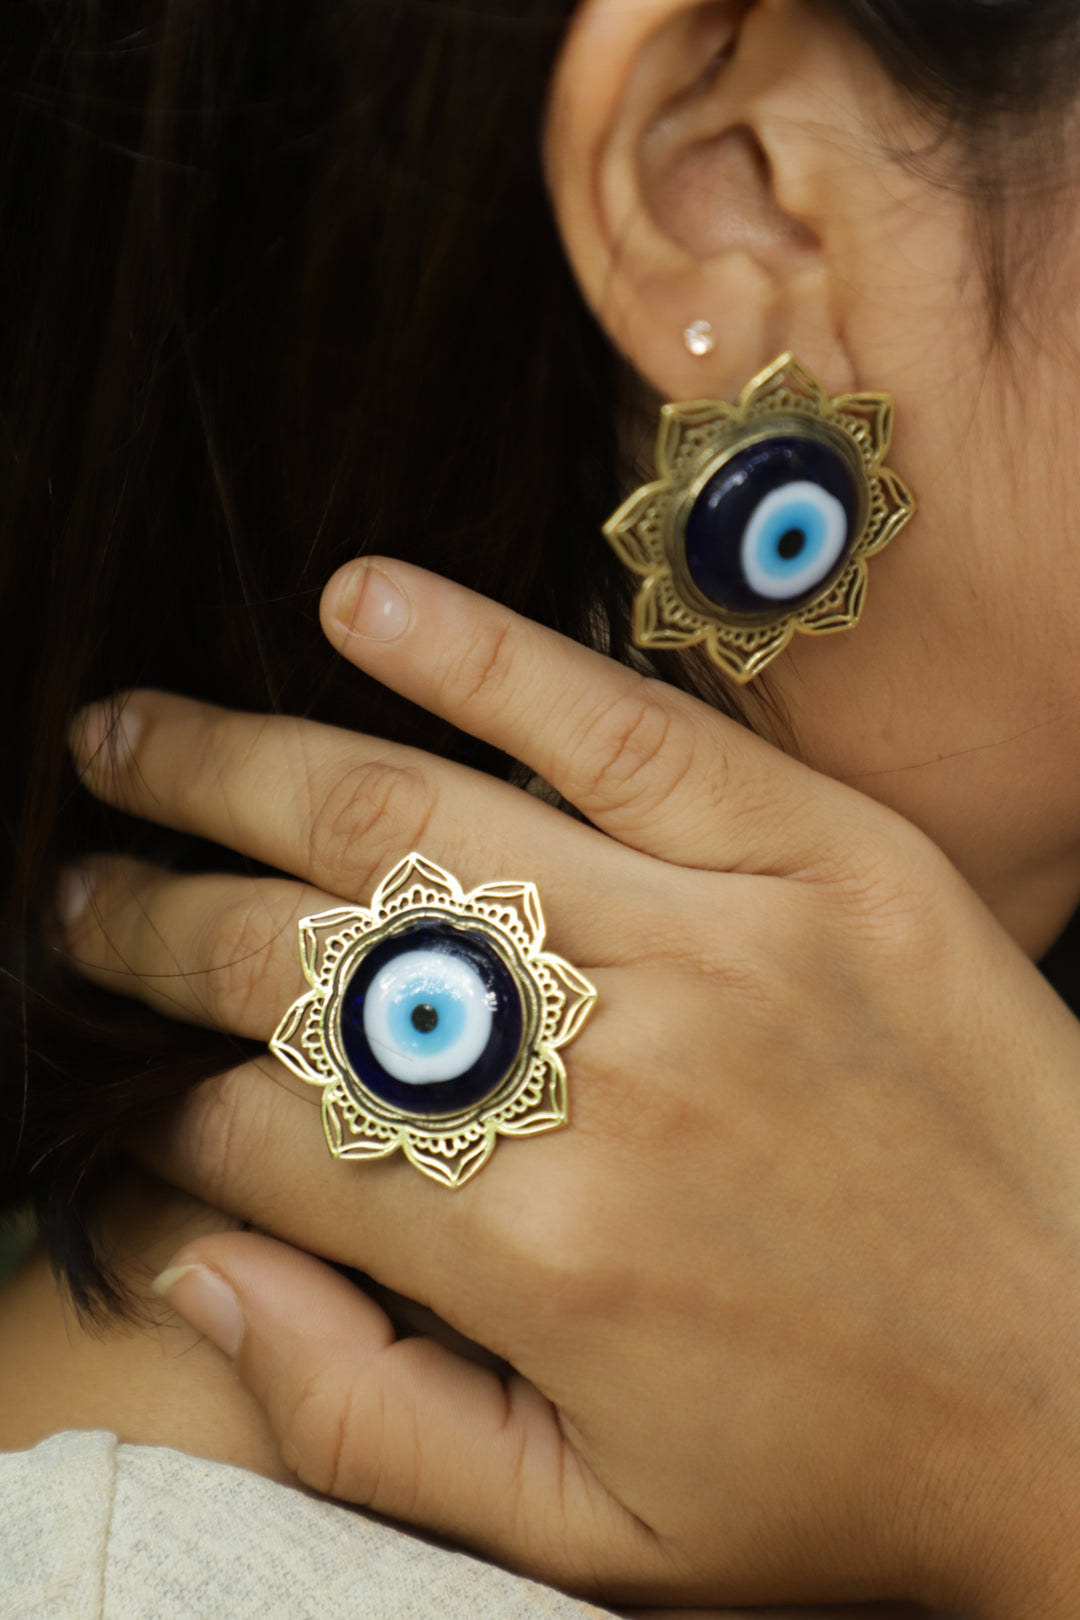 Mandala eye ring